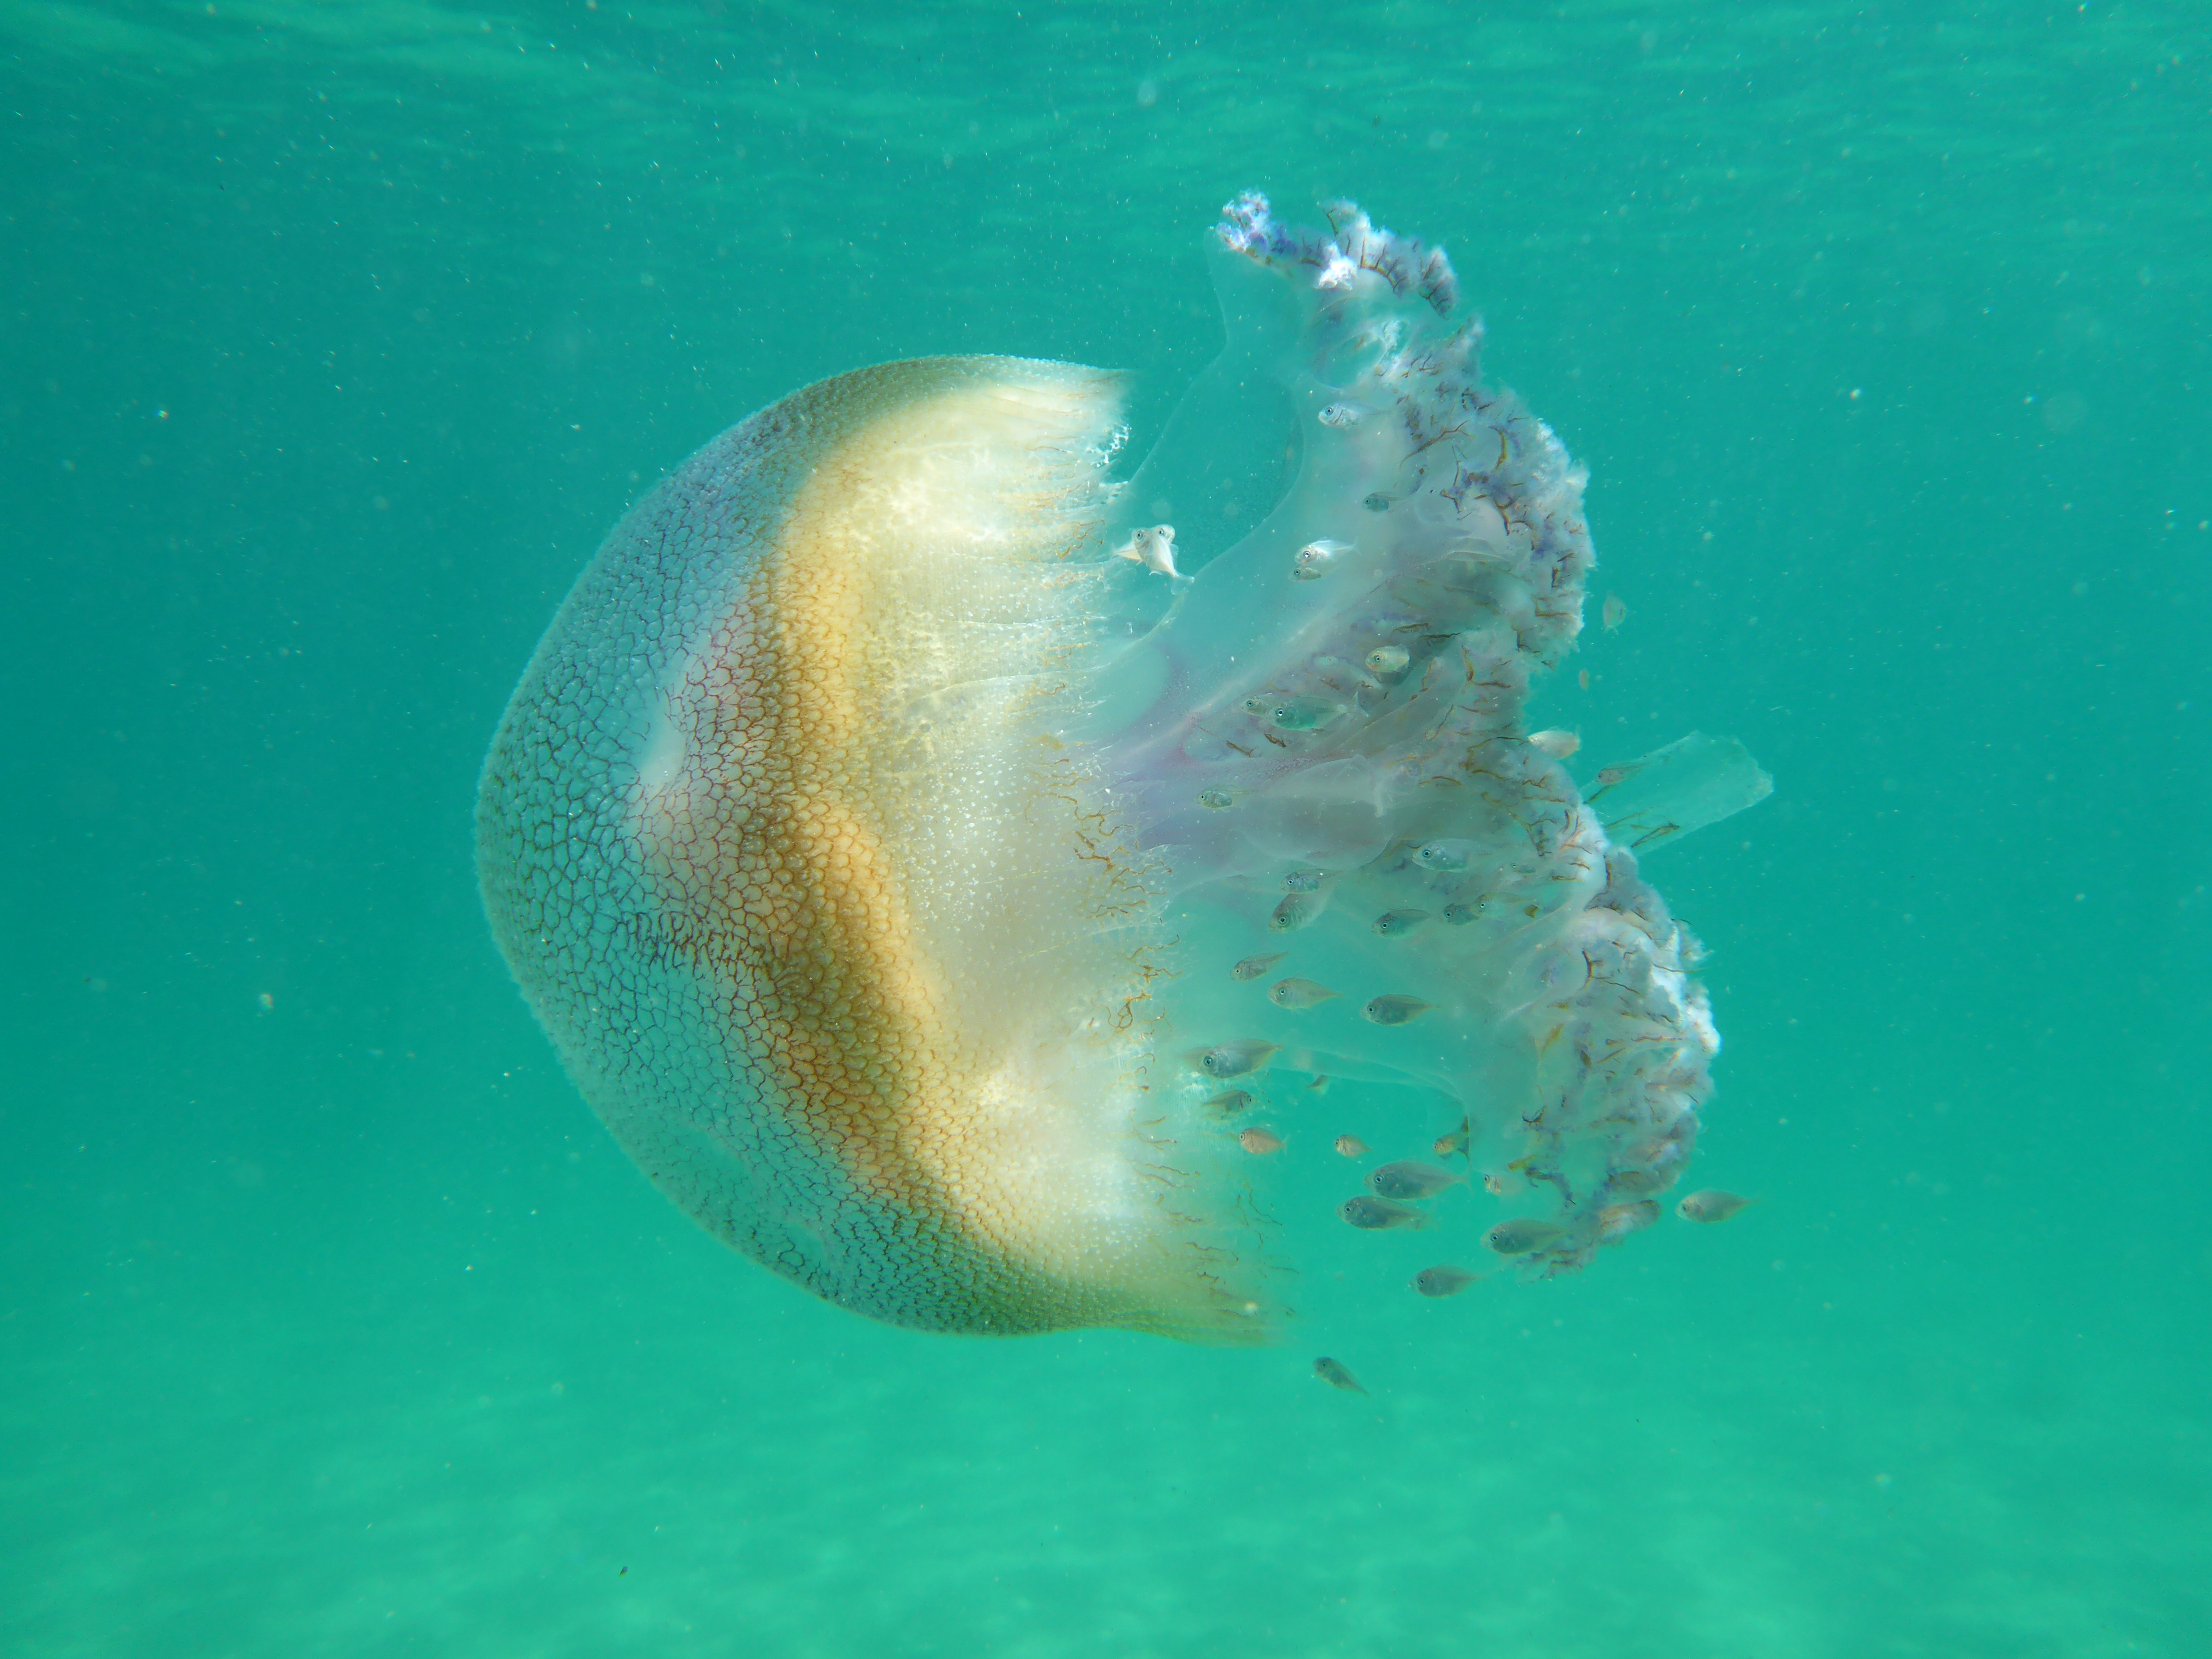 Jellyfish and small fish